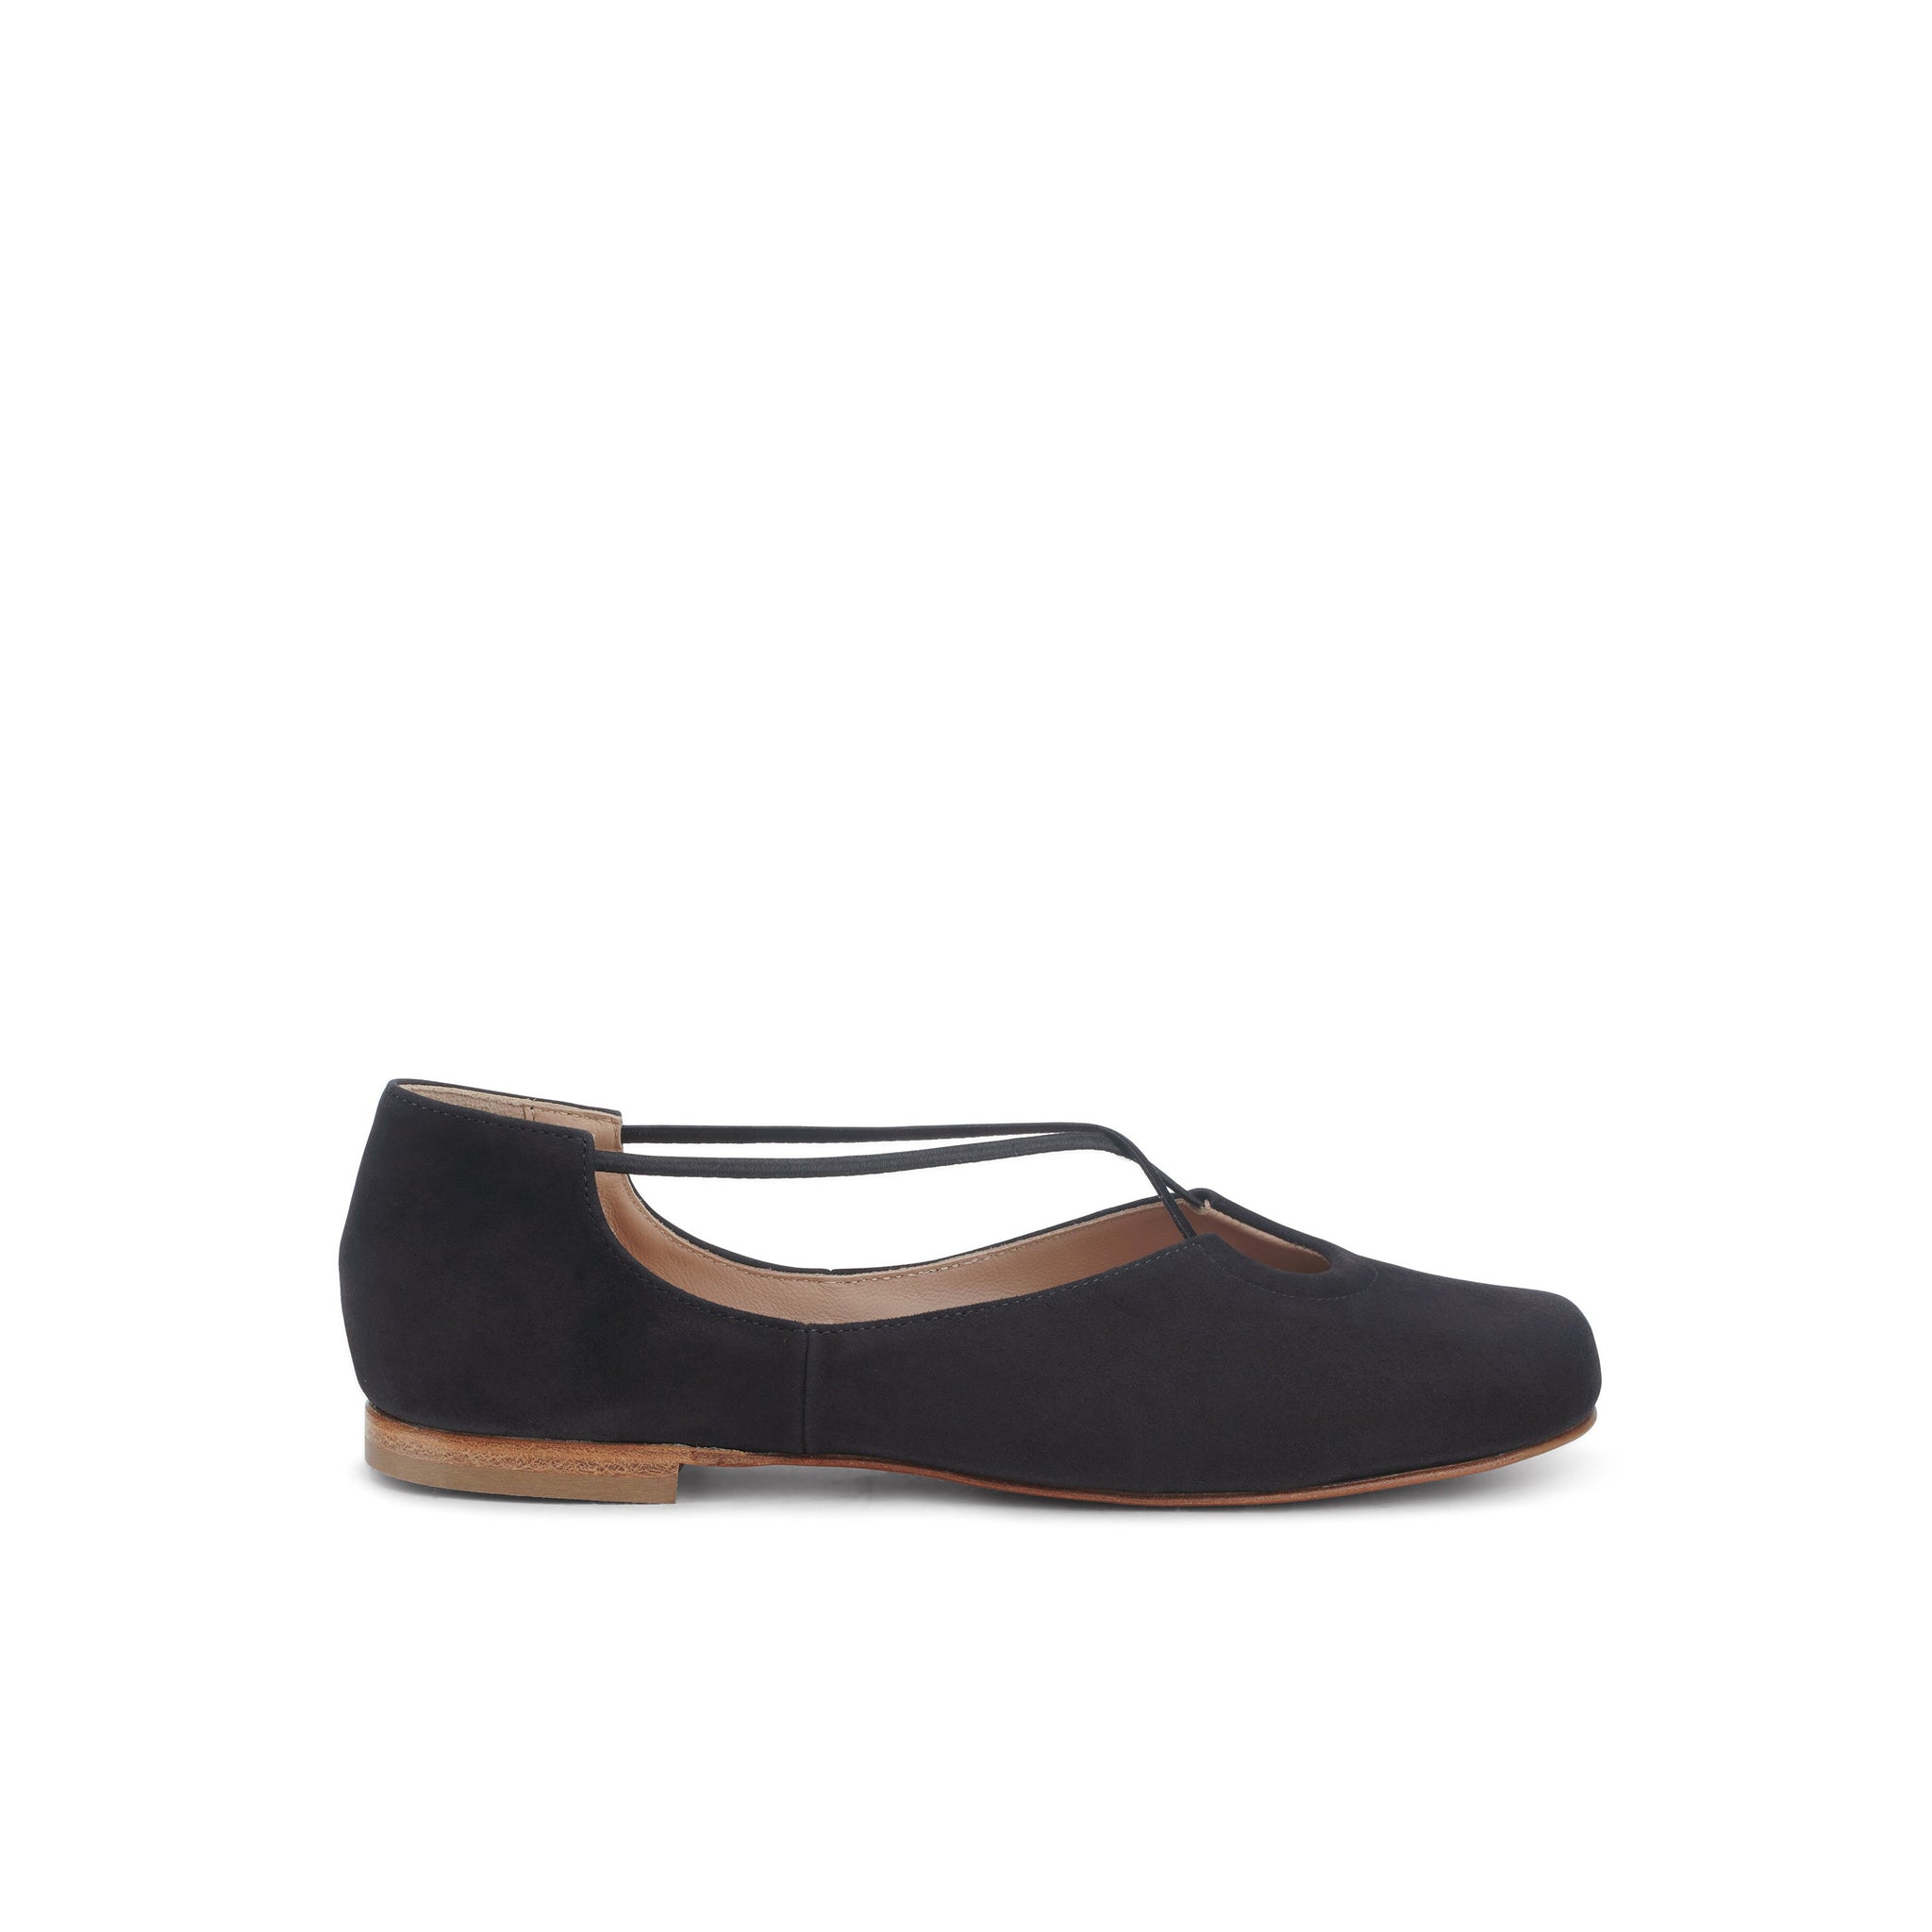 Bria Flex Flats | Women’s Flats | Italian Suede Shoes - Italeau Nuova